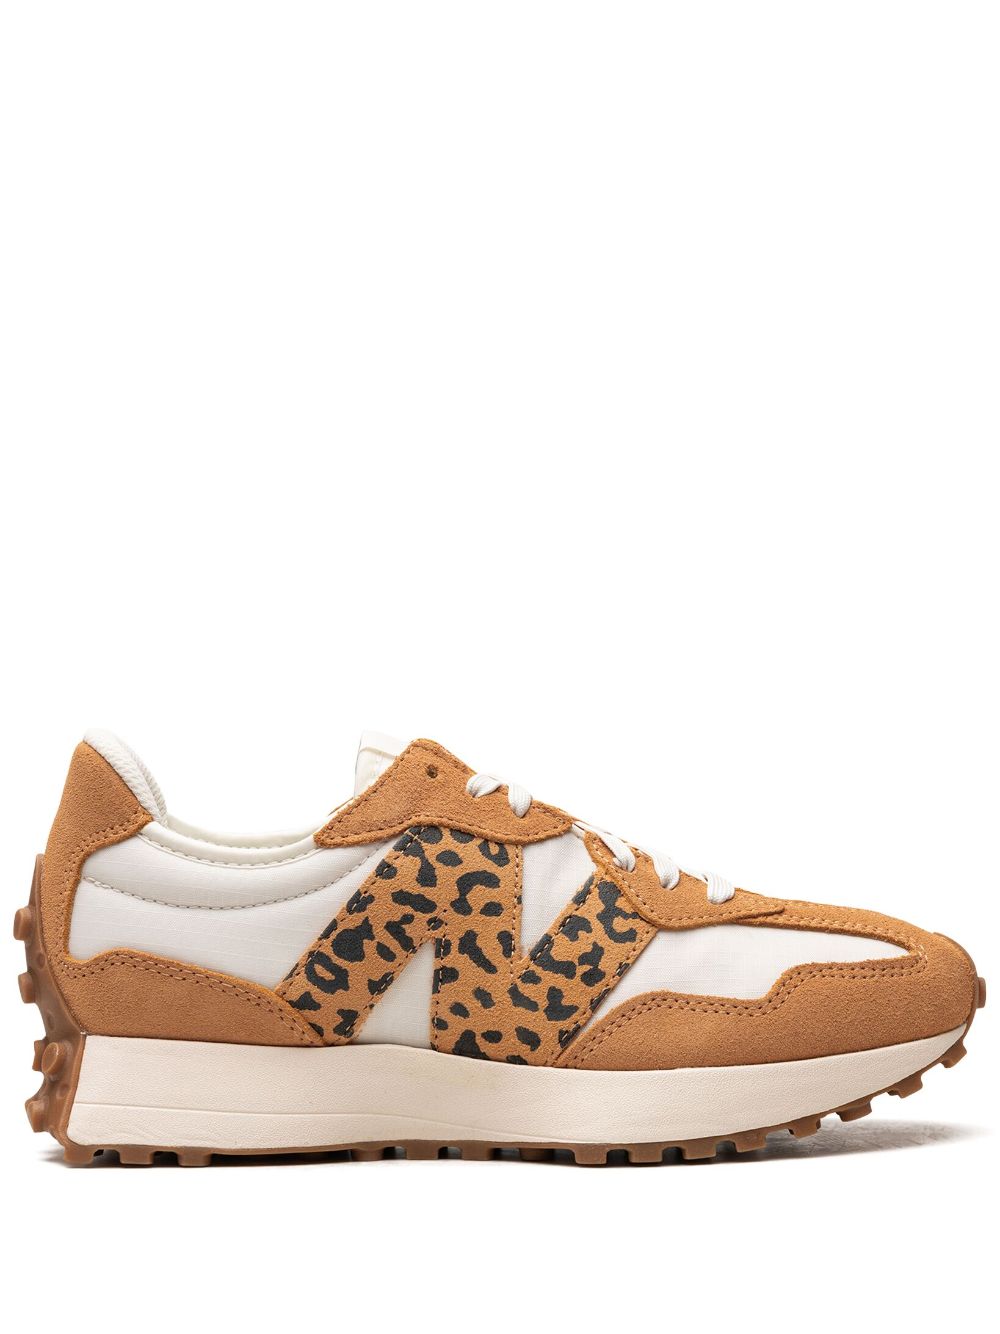 New Balance 327 "Leopard" sneakers - Neutrals